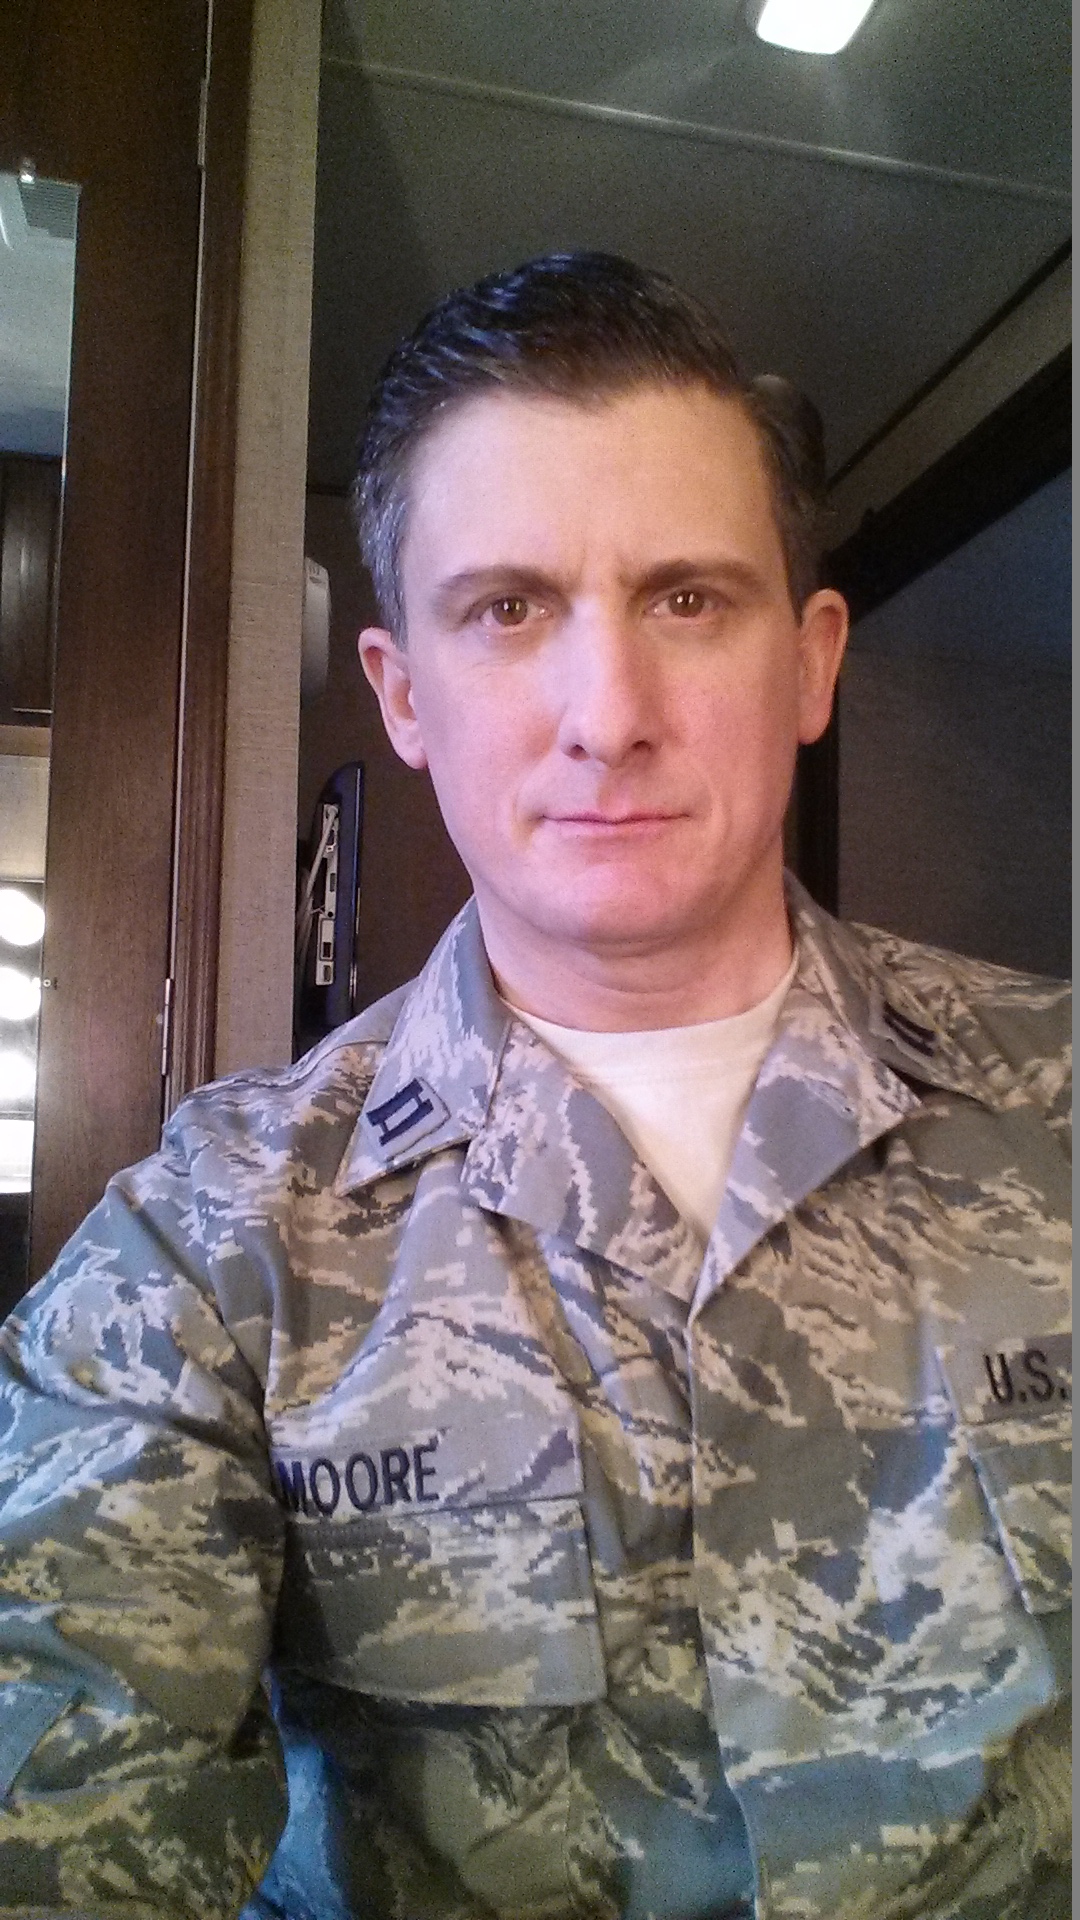 USAF Senior Officer Moore shooting 